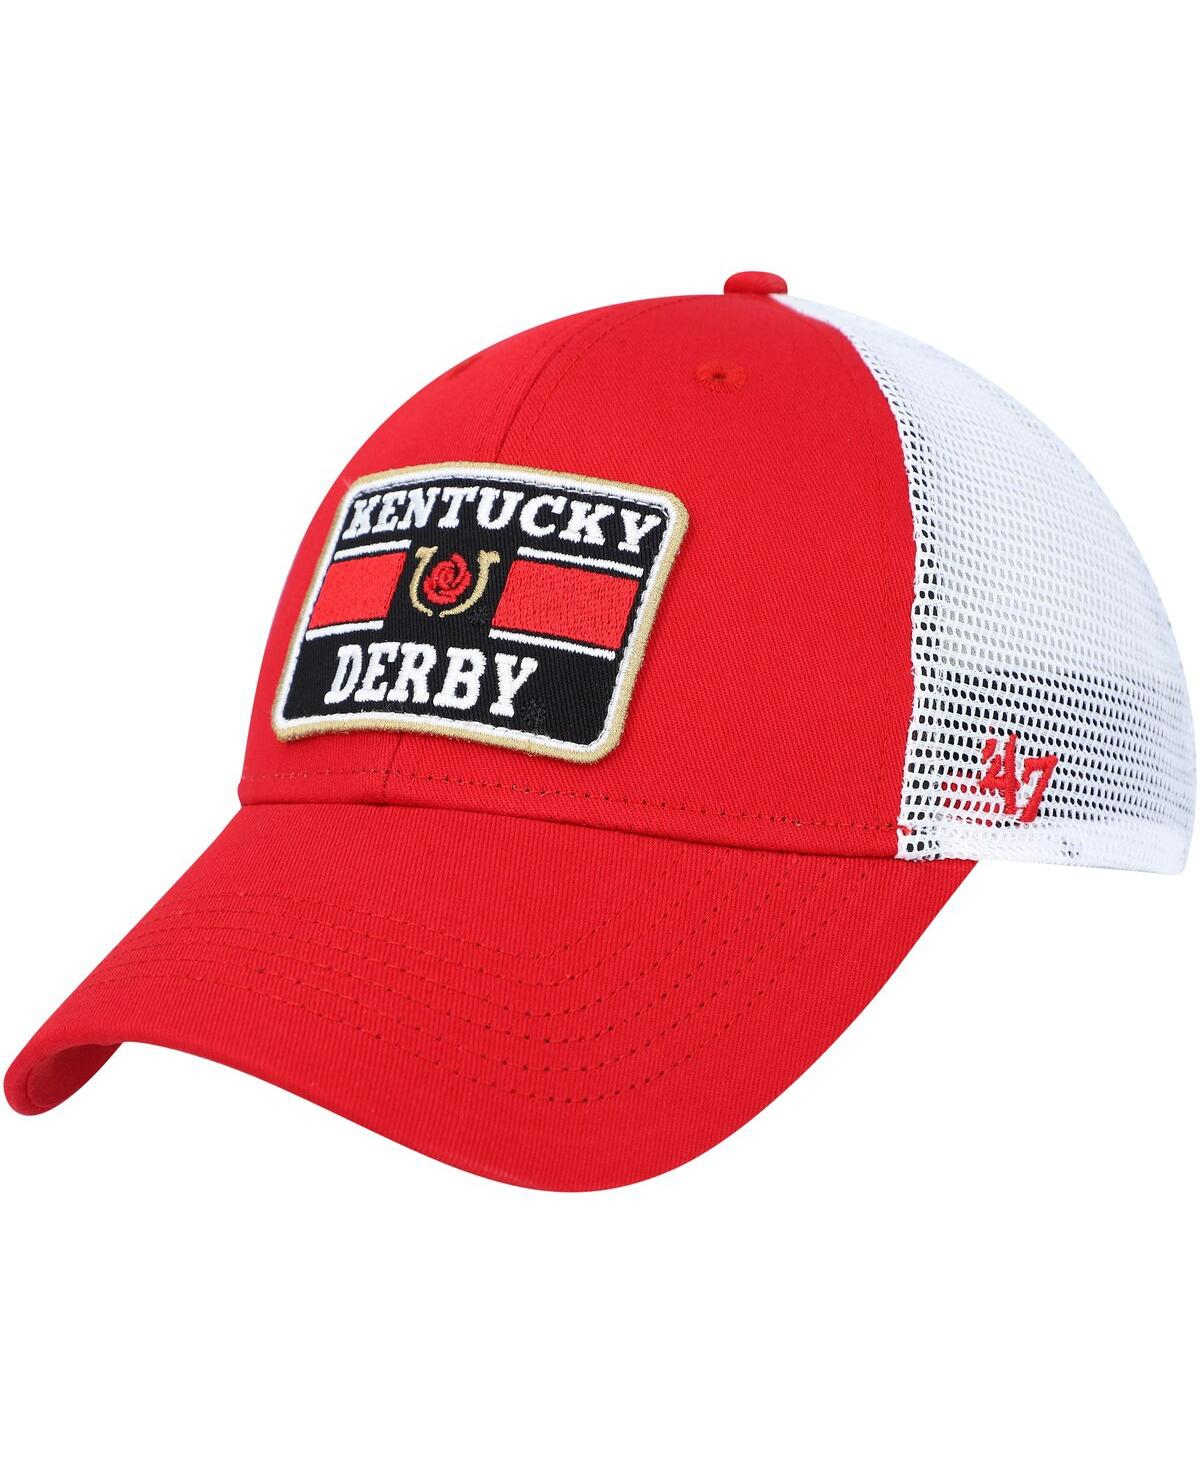 Men's '47 Brand Red Kentucky Derby Mvp Snapback Hat - Red